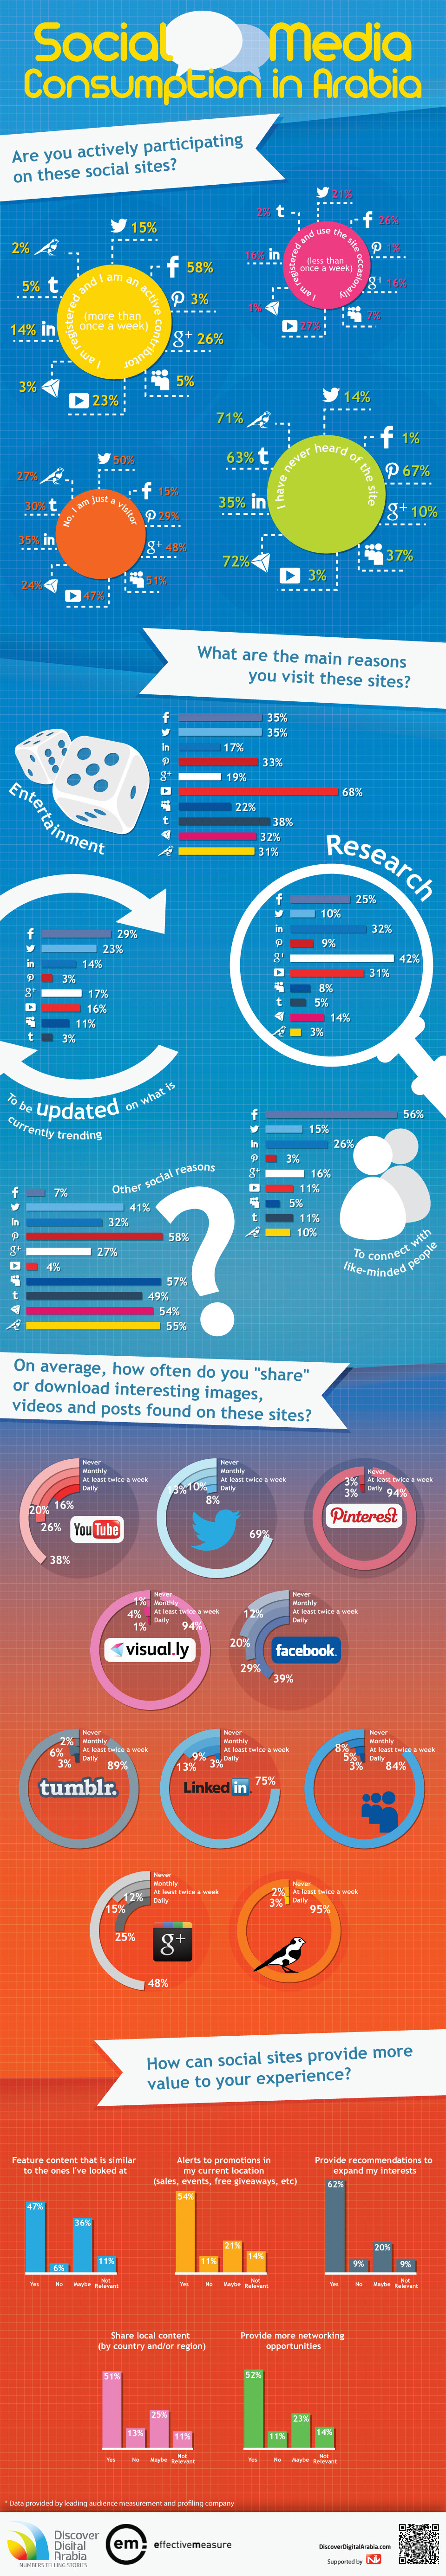 Arab Social Media Usage-Infographic